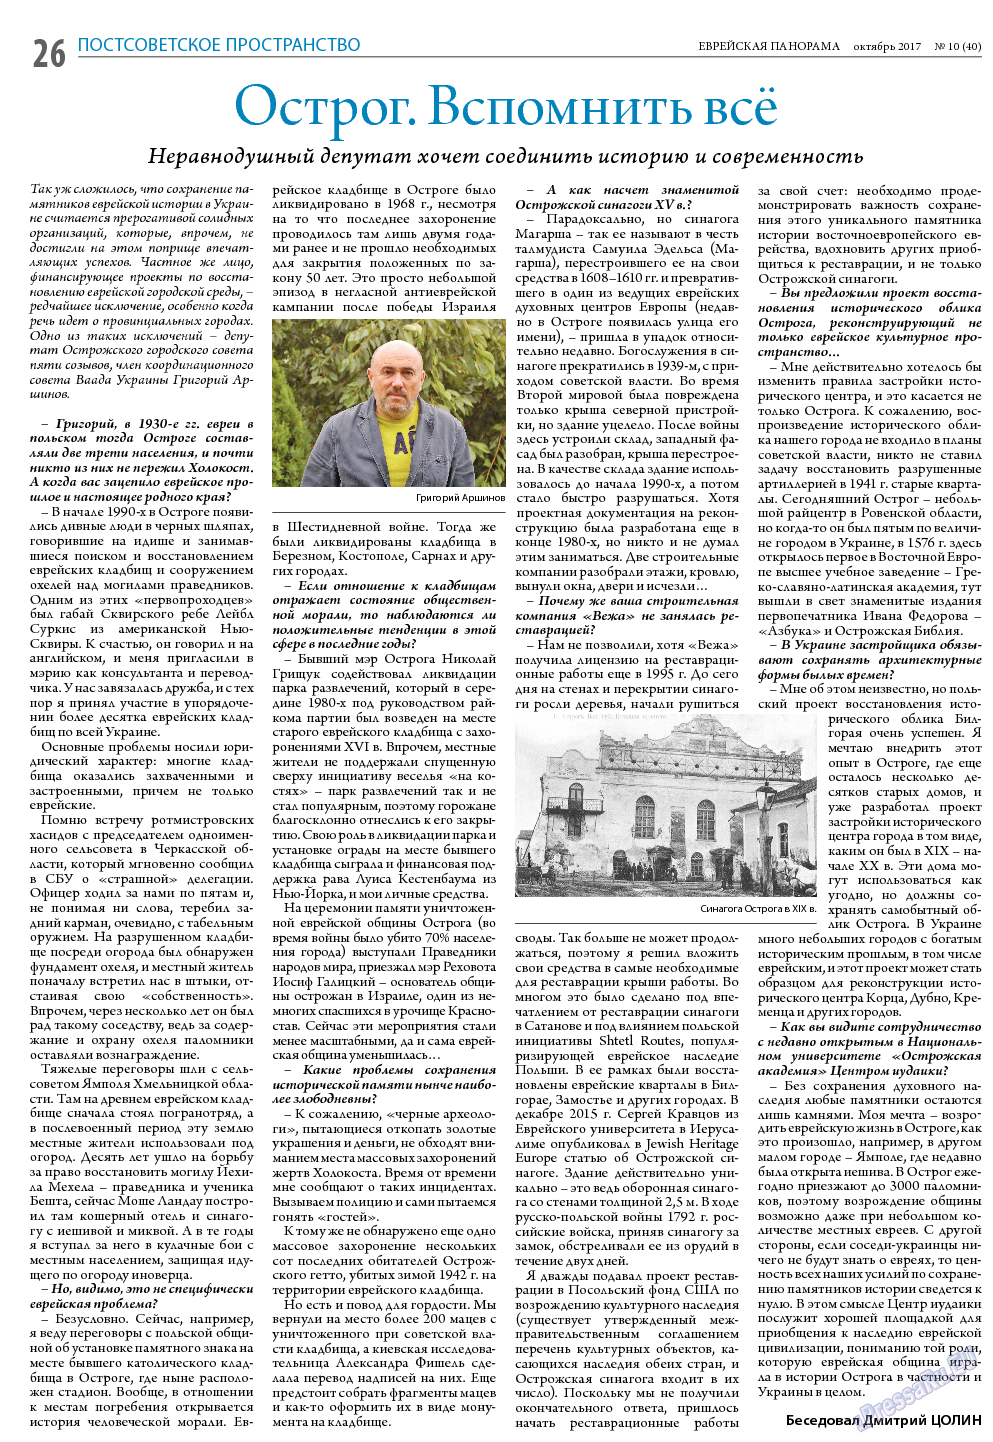 Еврейская панорама, газета. 2017 №10 стр.26